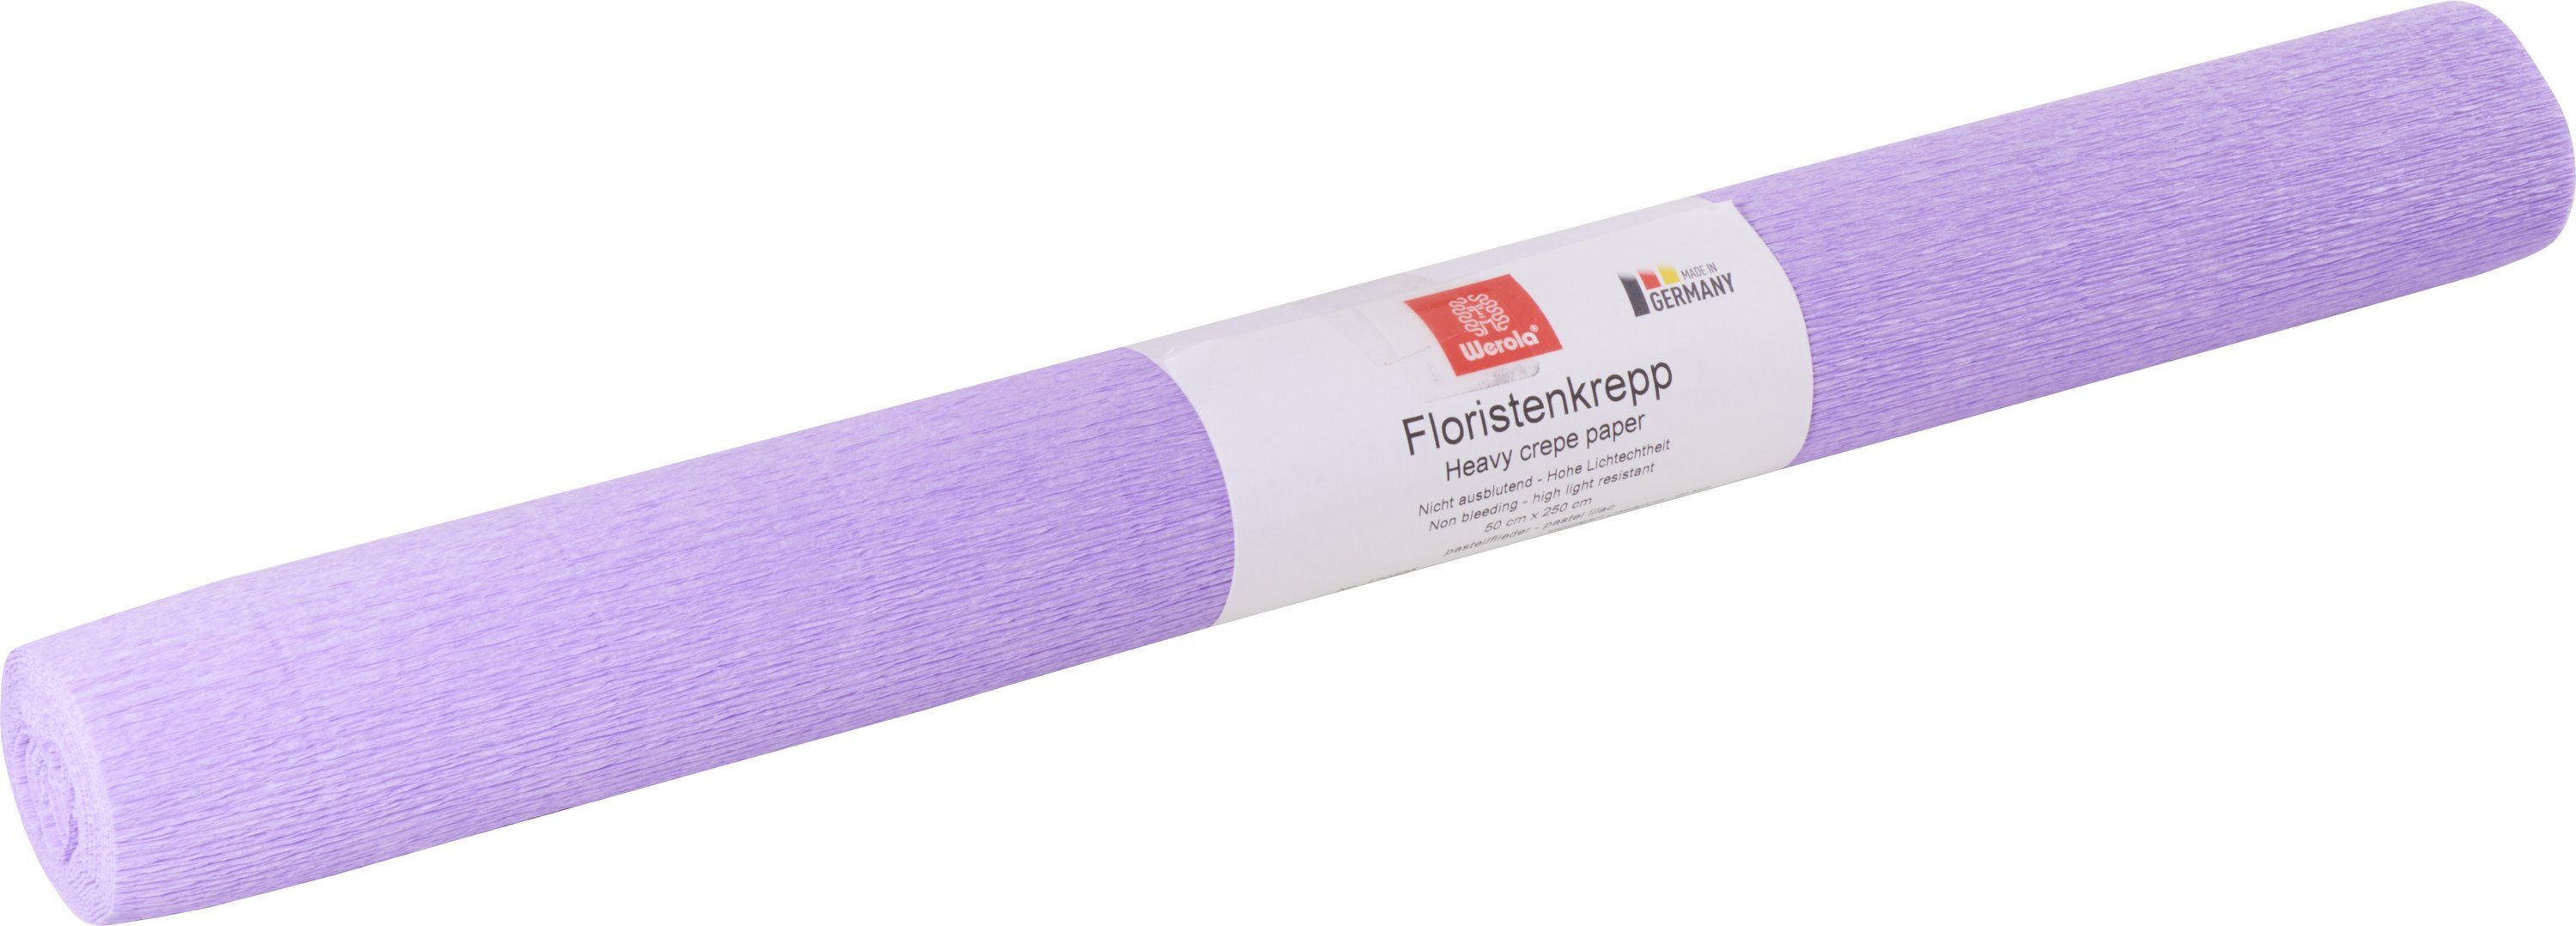 50 farbfest Pastell-Flieder cm, cm x Werola 250 Floristen-Kreppapier, Feinpapier